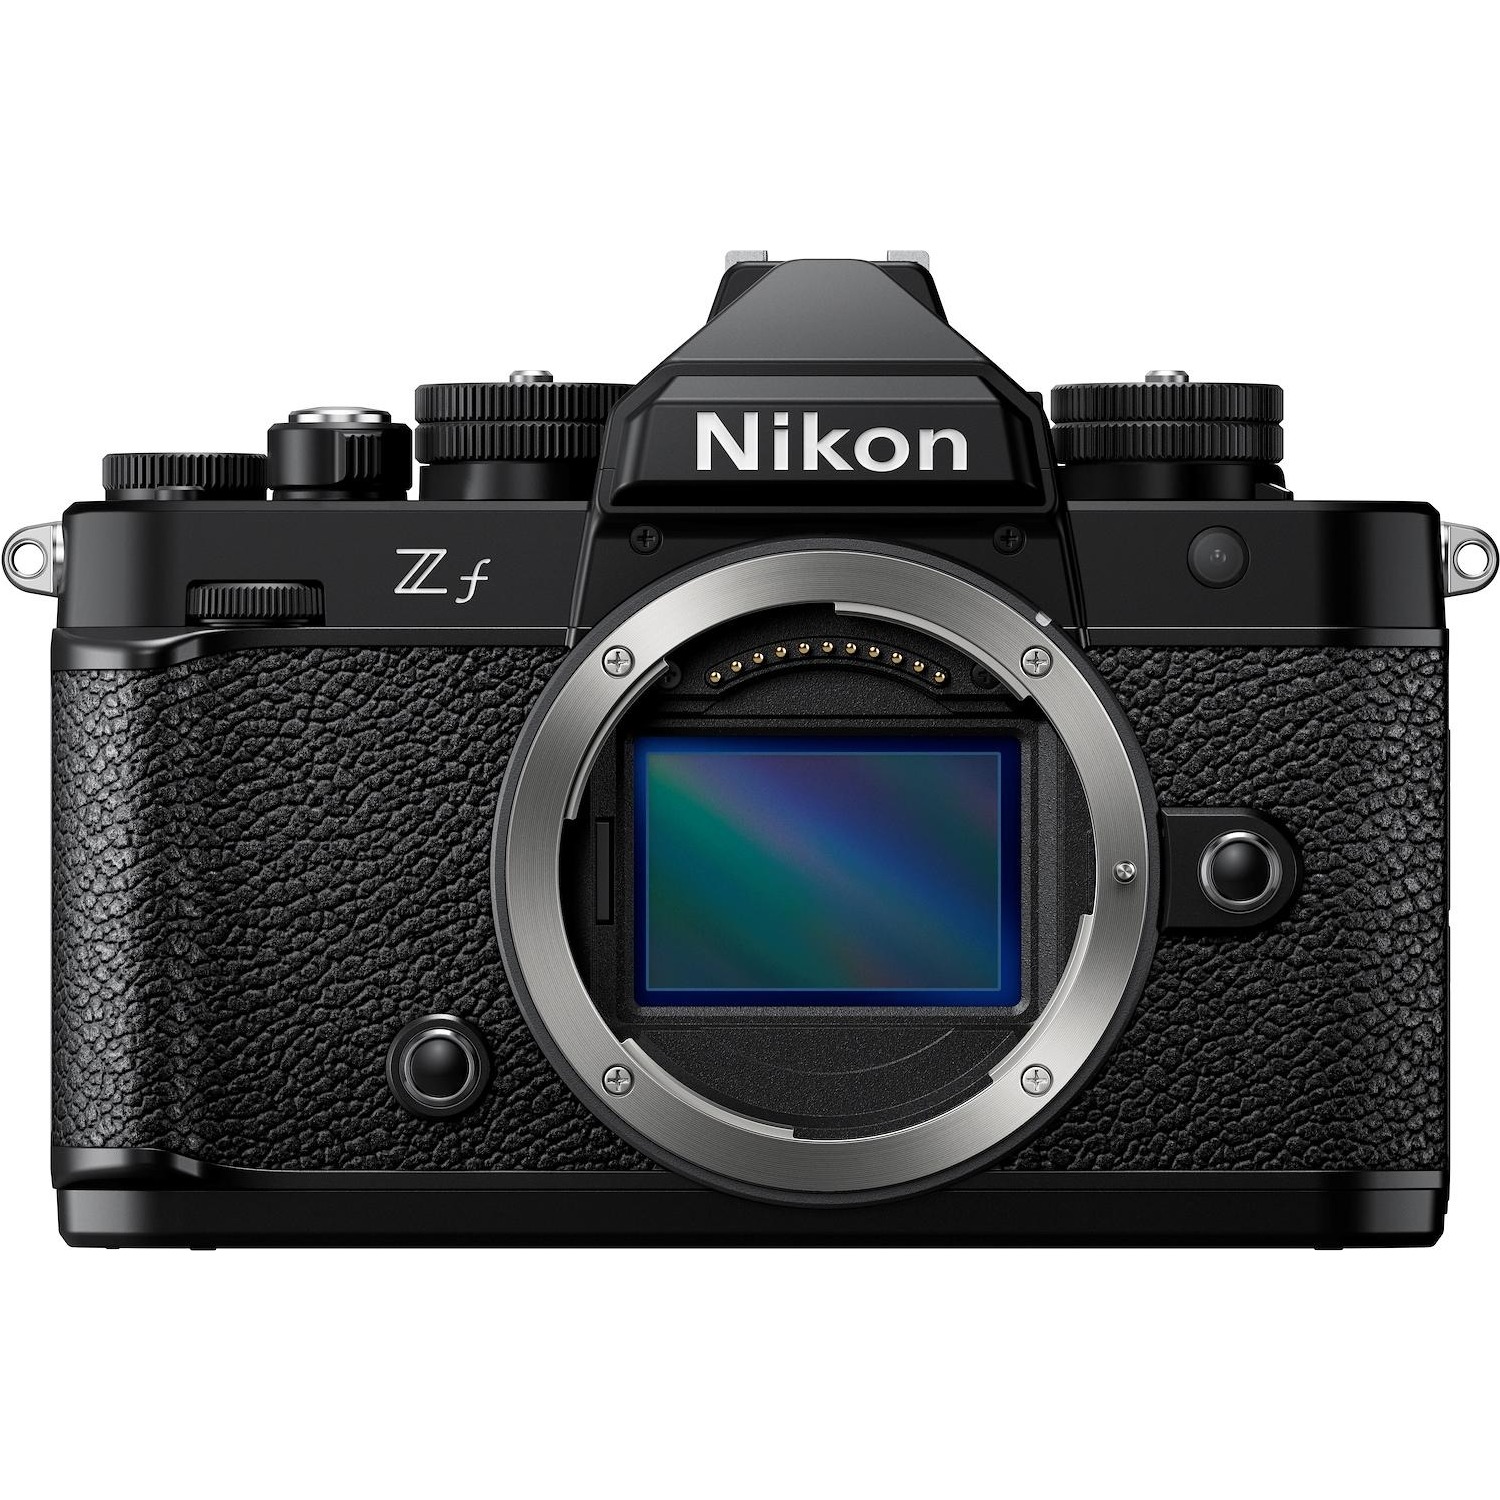 Immagine per Fotocamera mirrorless Nikon Z f Body + scheda SDXC128GB da DIMOStore